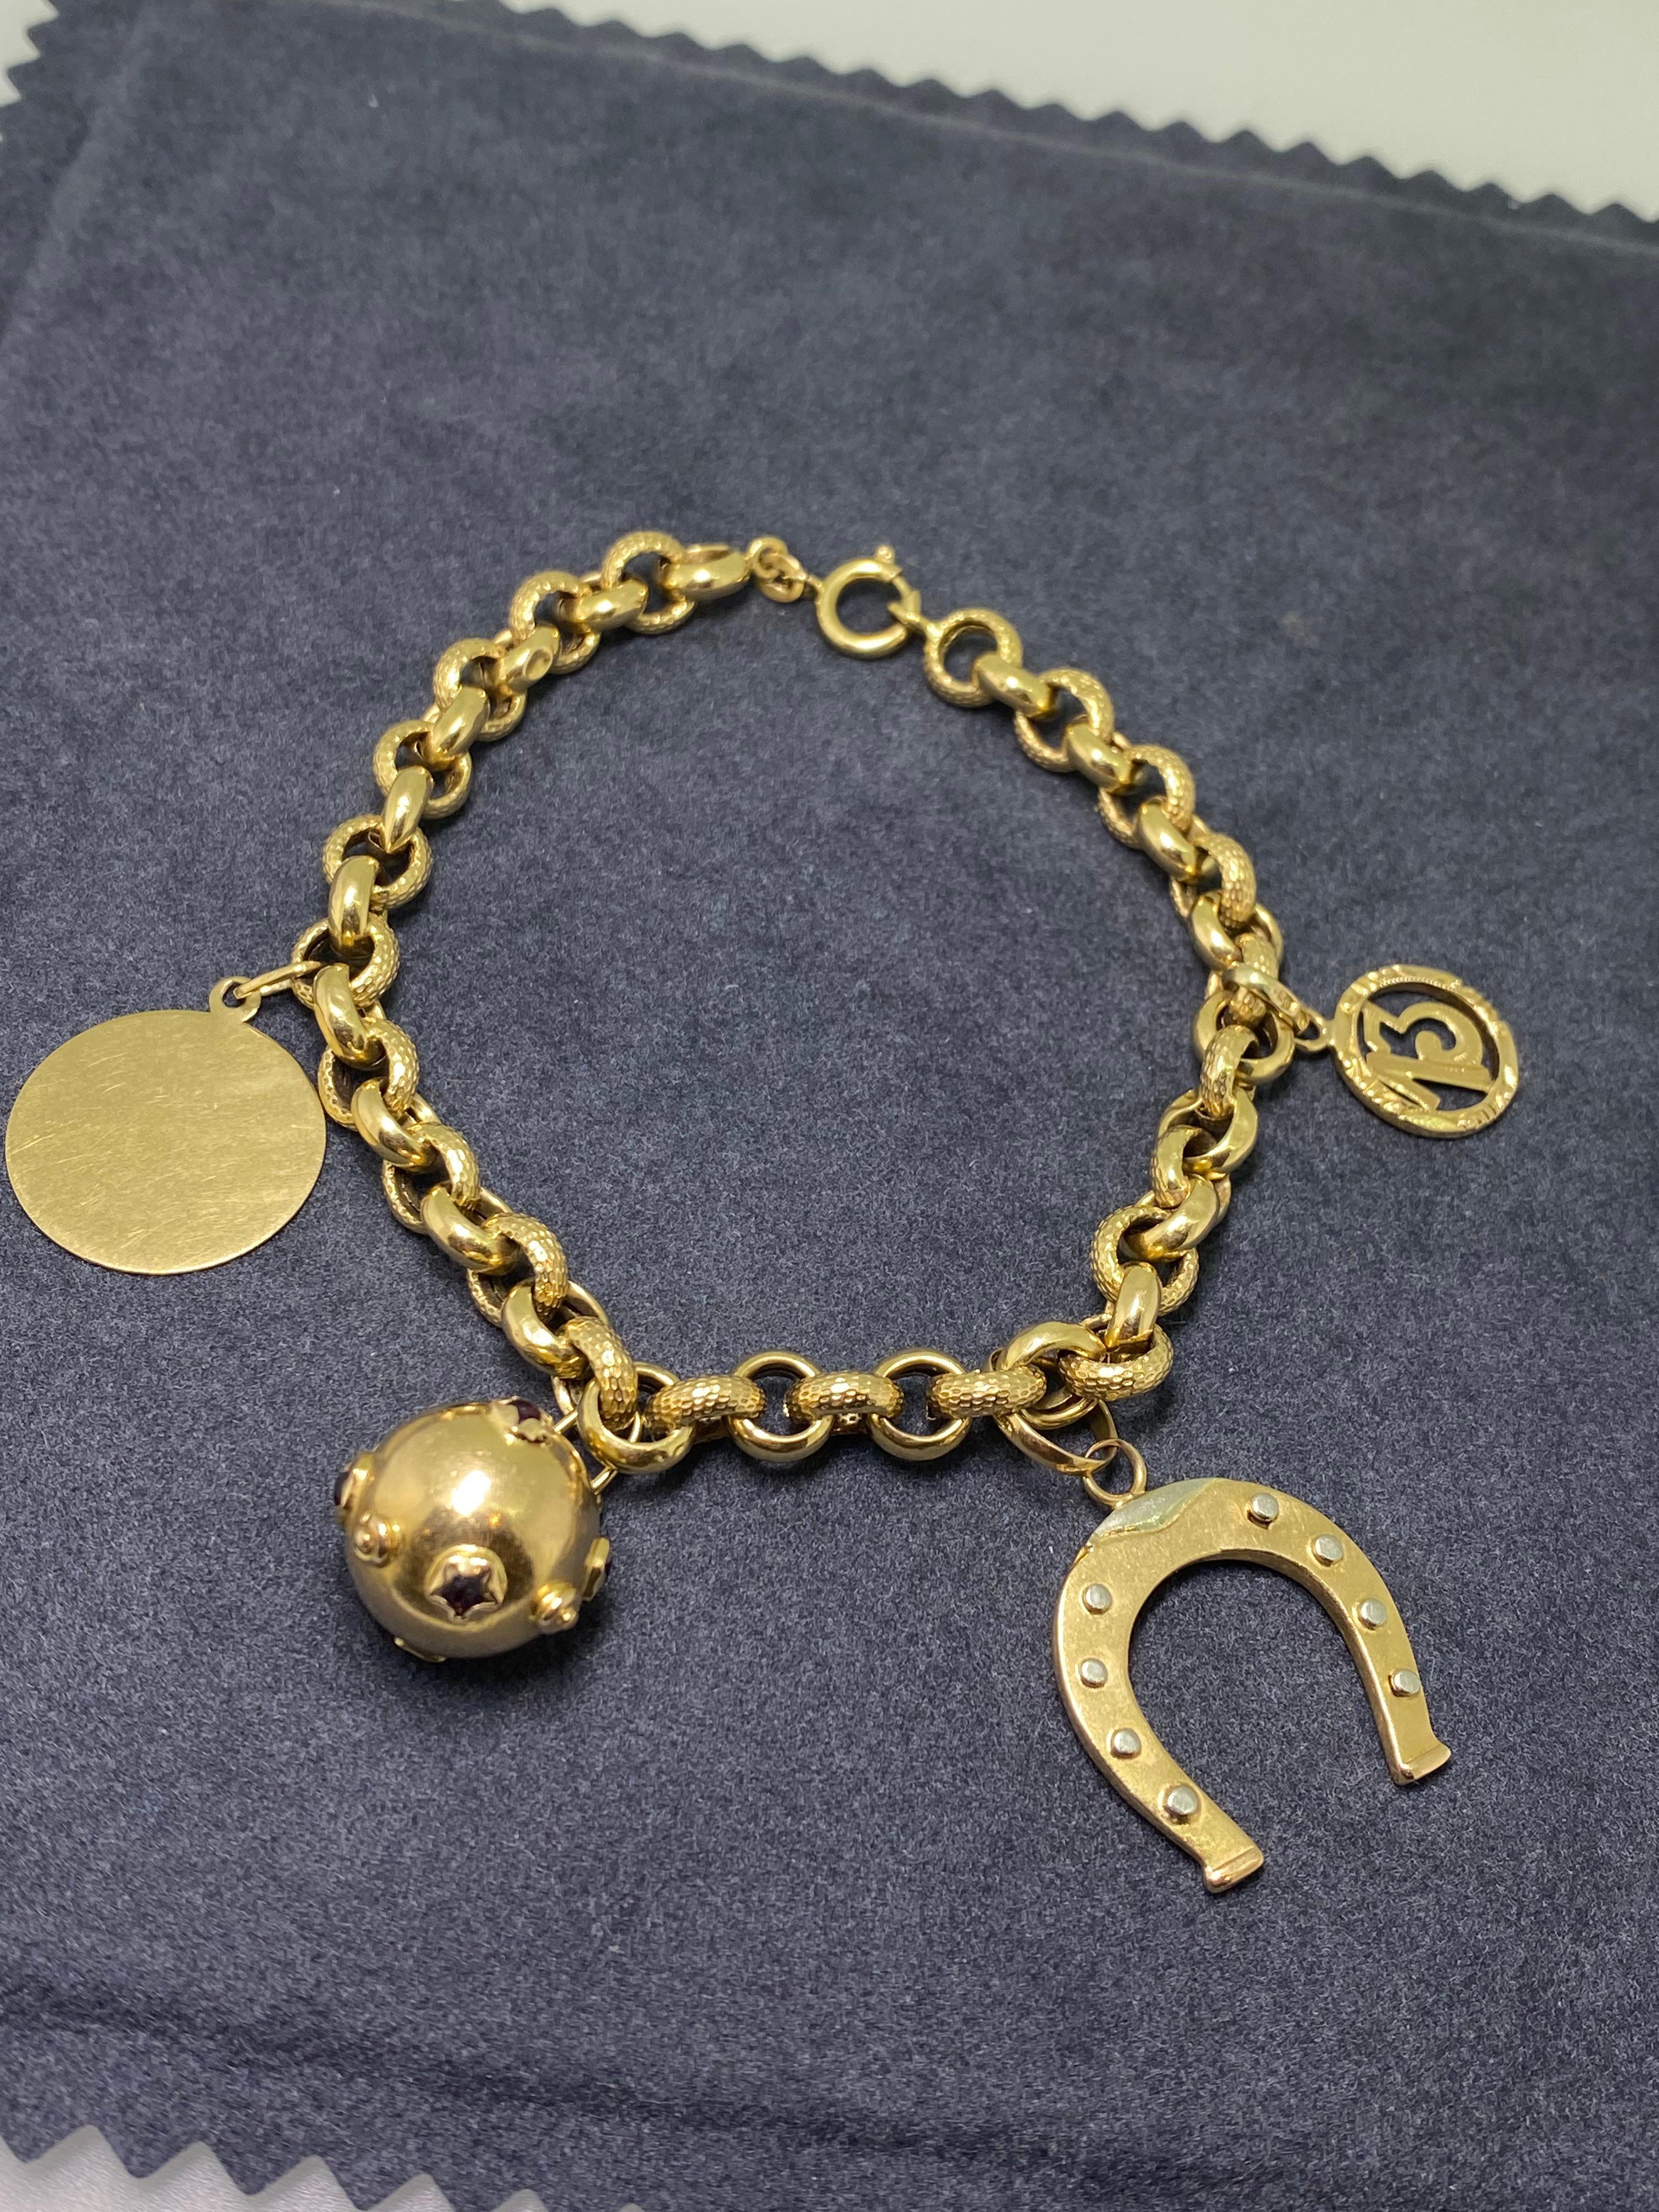 Modern 18k Yellow Gold Italian Charm Bracelet: Horseshoe, Ball, Disk, Figure 13 Charms